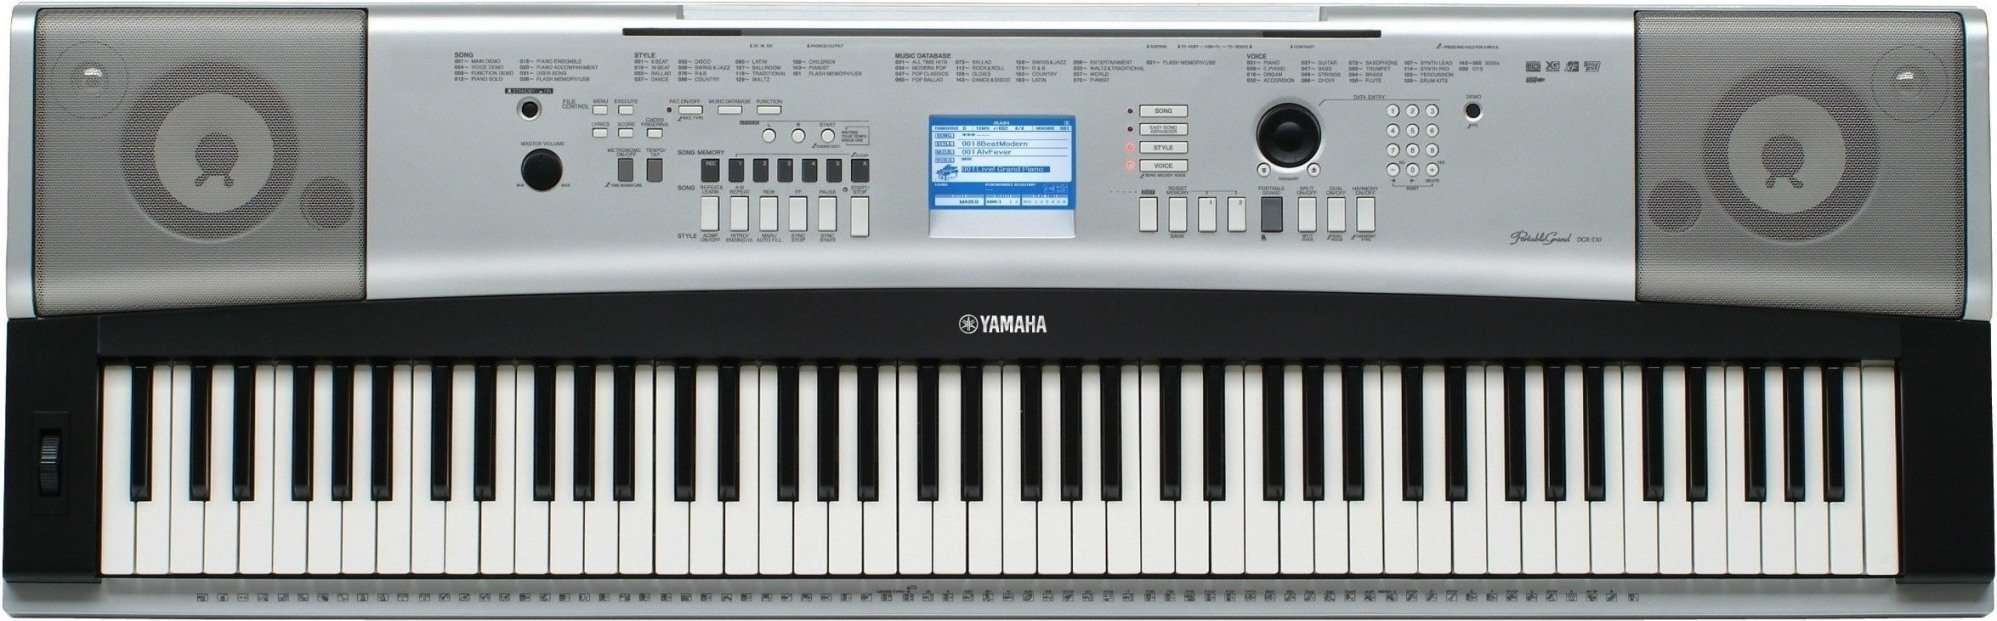 DGX-530 - Downloads - Portable Grand - Pianos - Musical ...